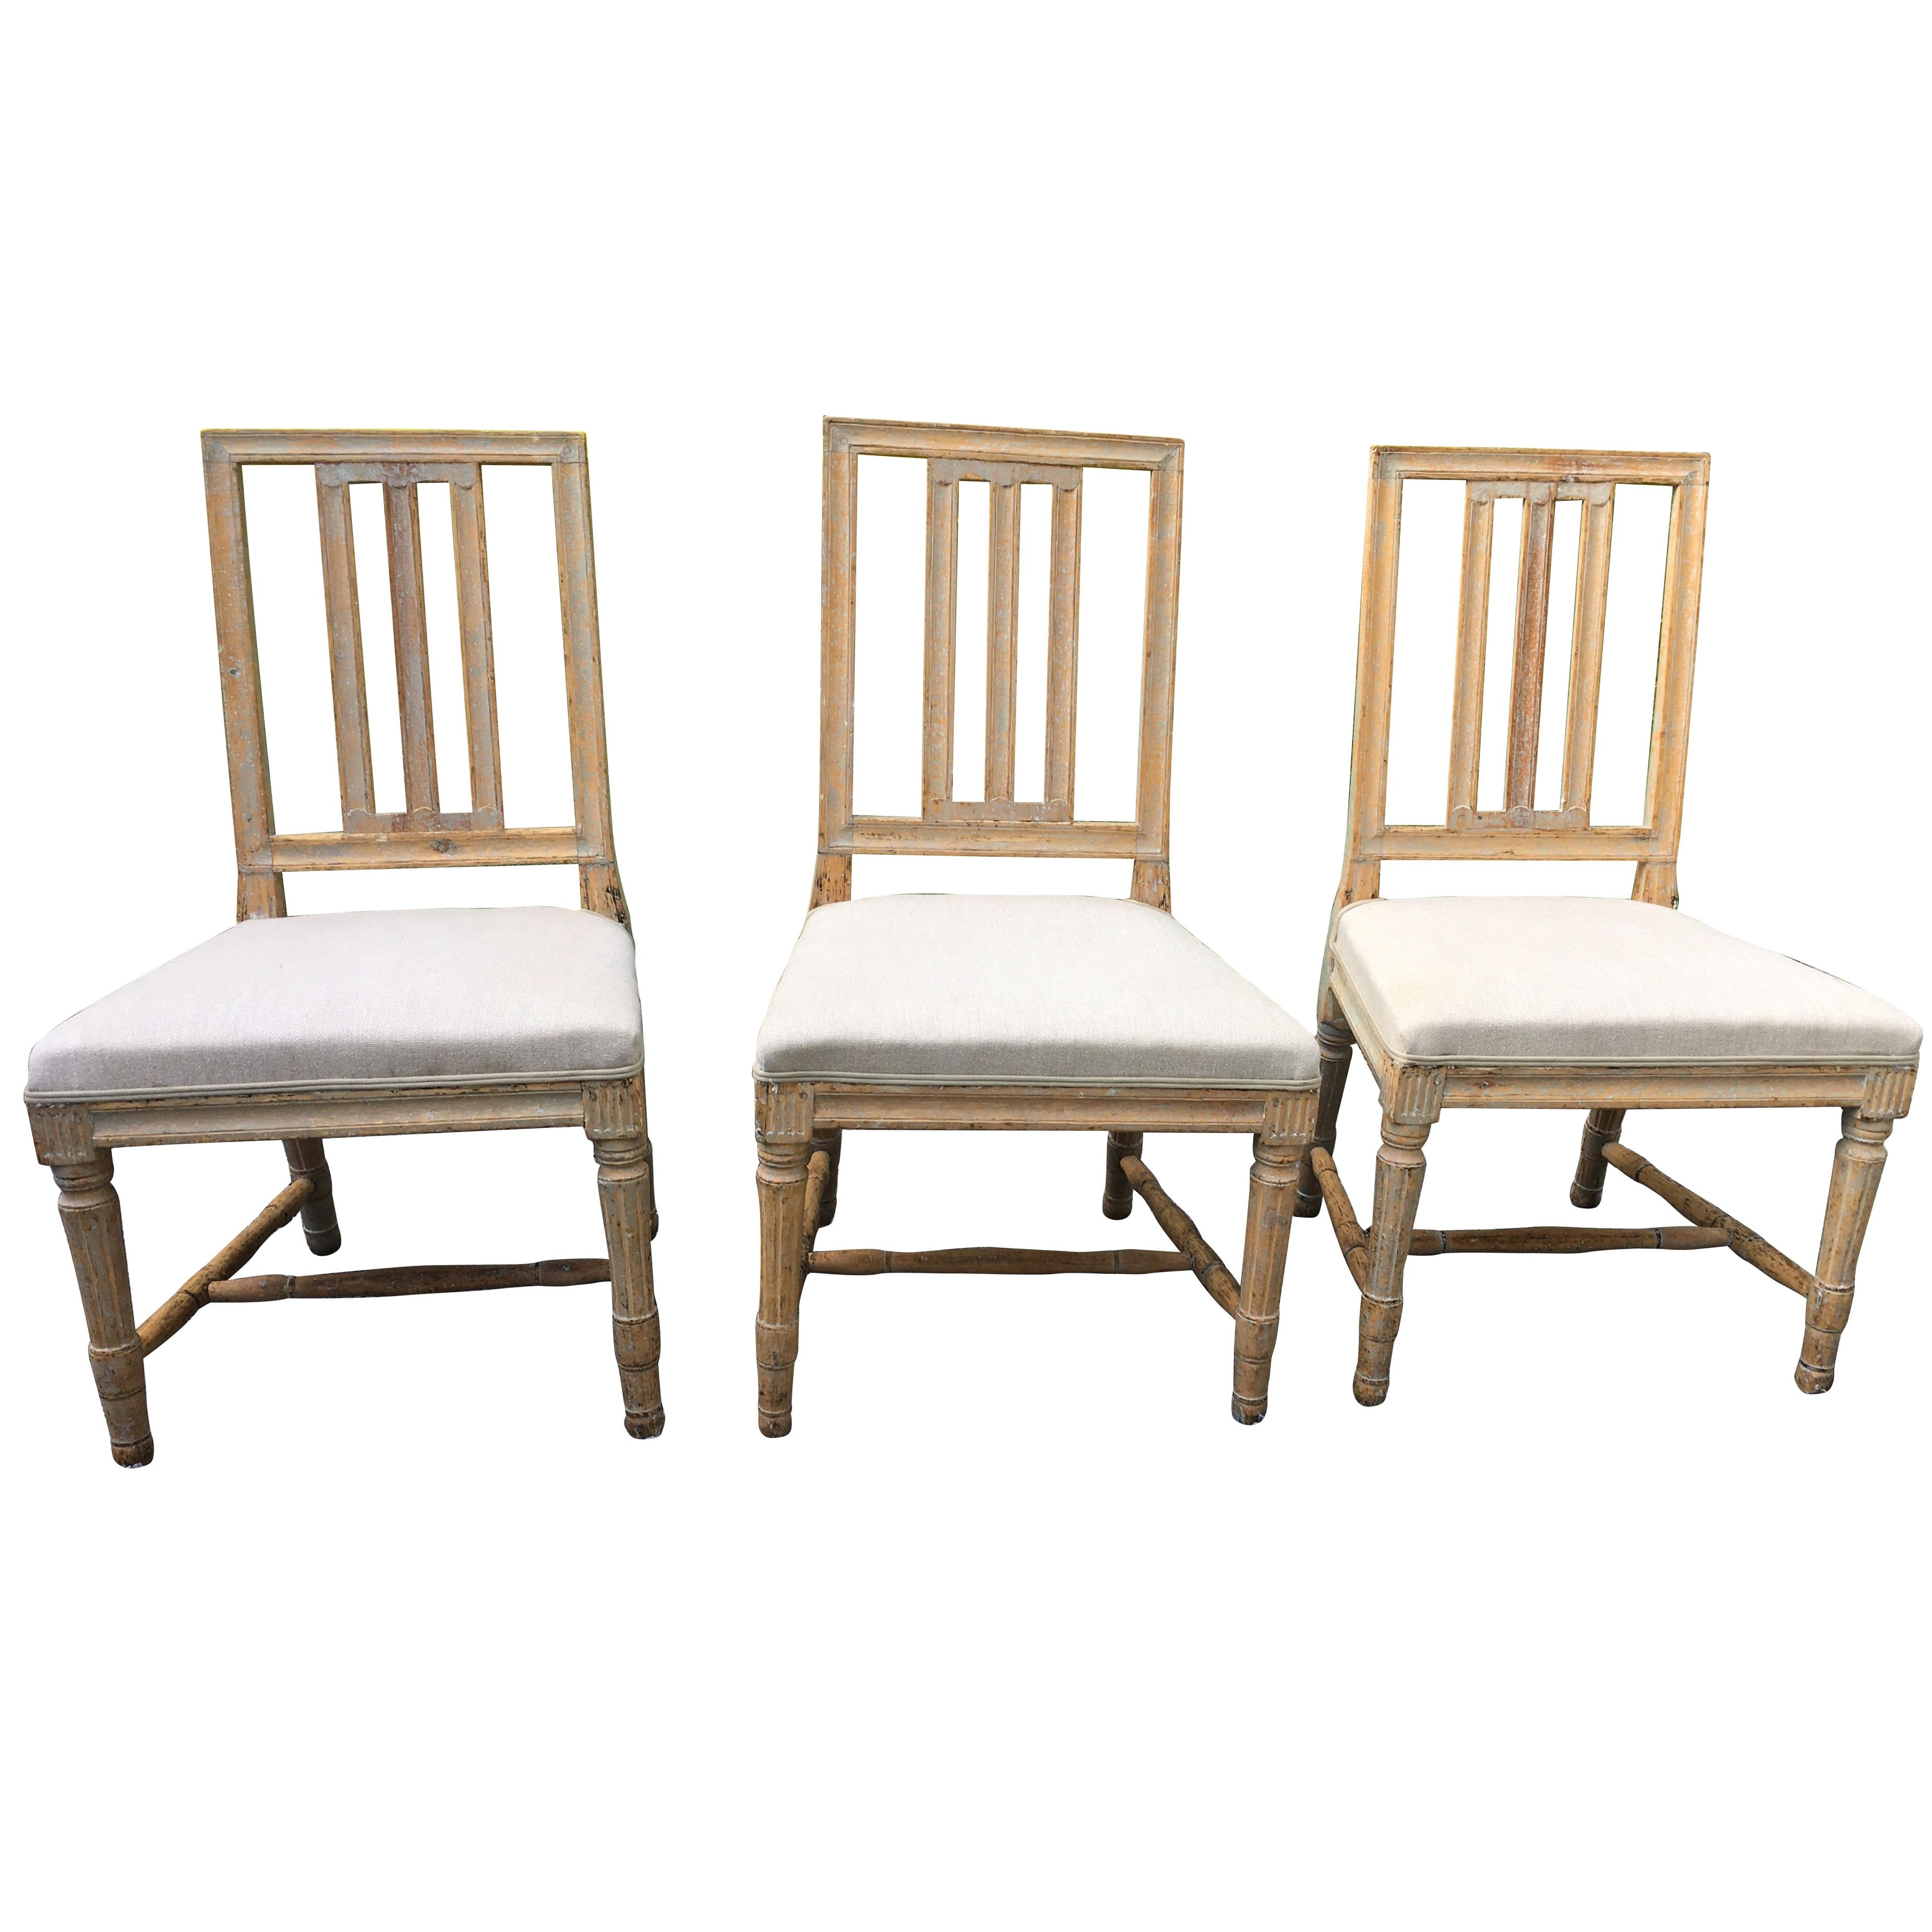 Set of Three 19th Century Gustavian Chairs